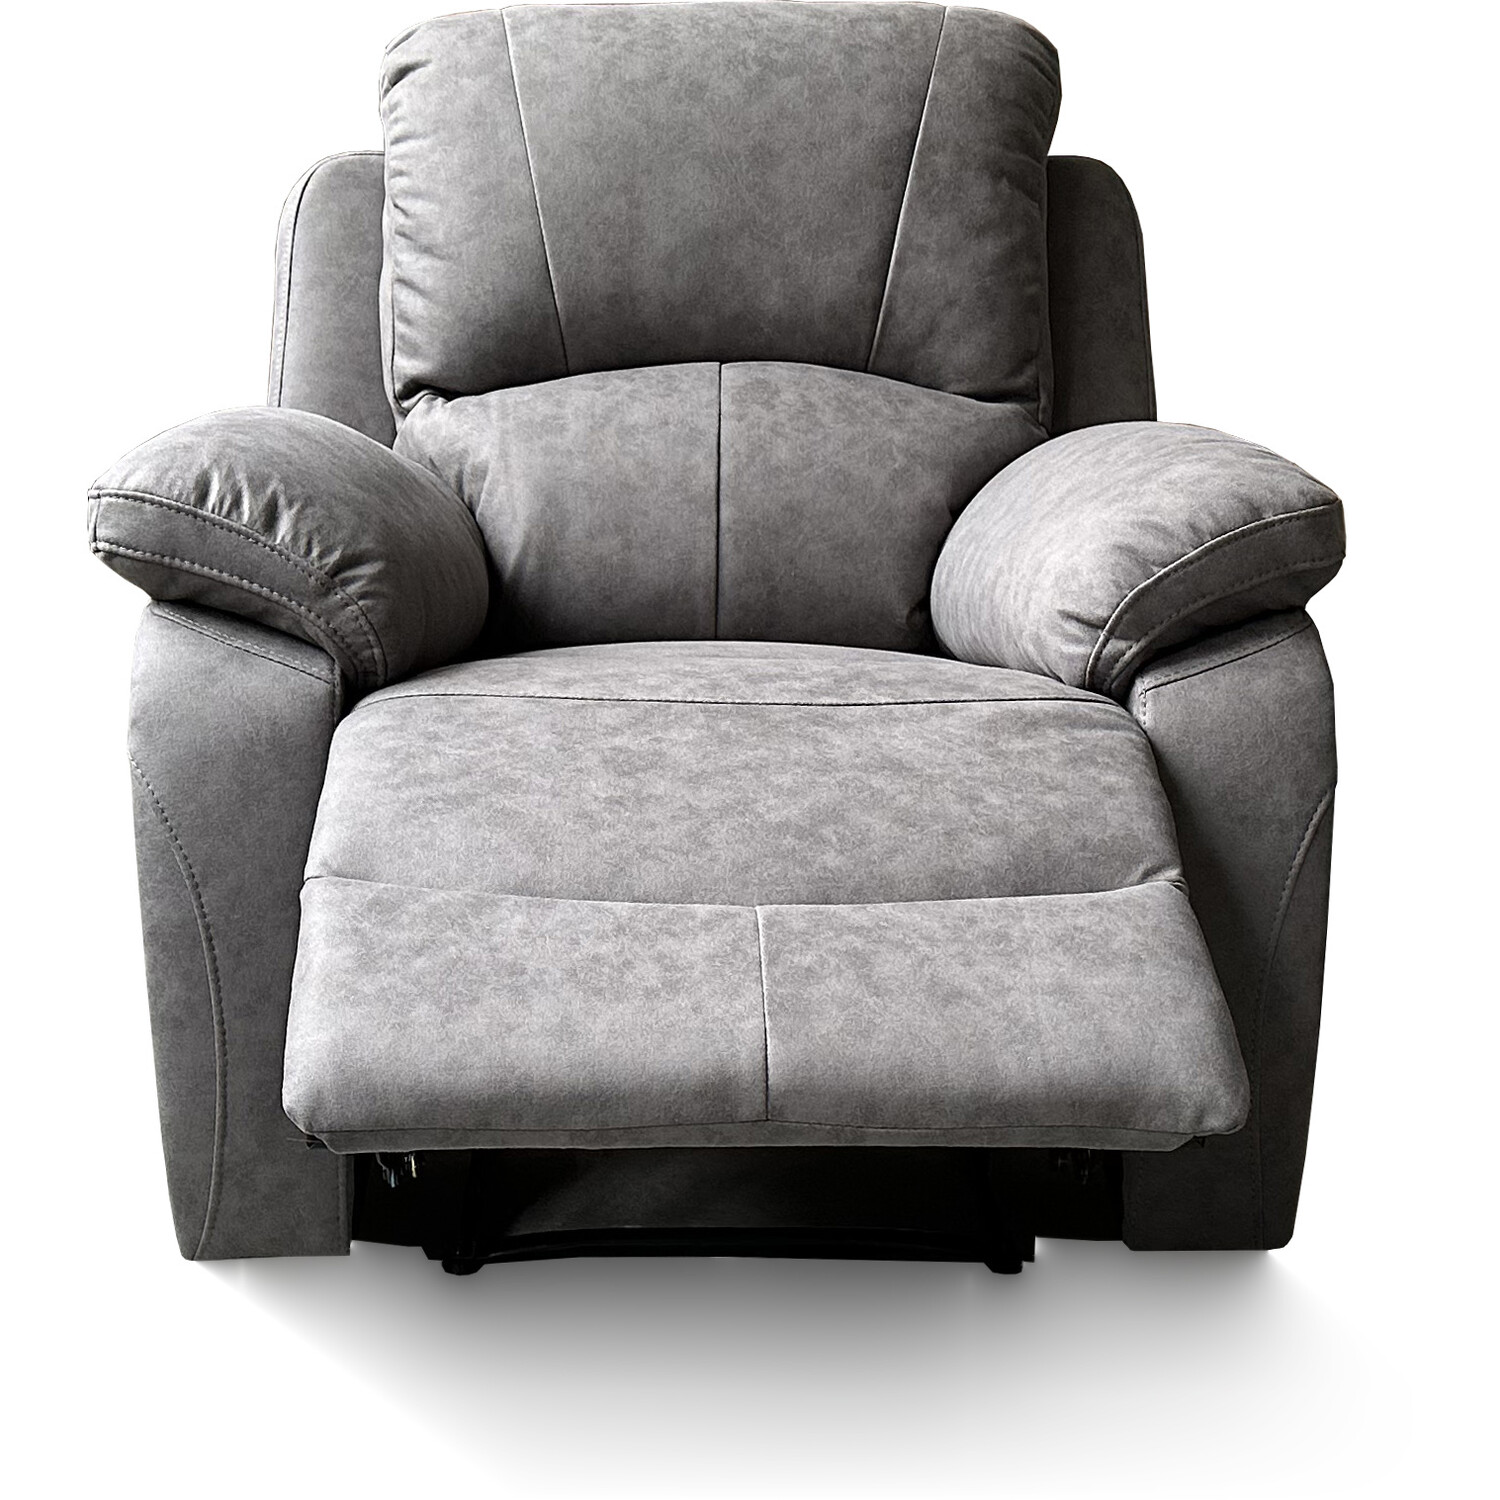 Milano Charcoal Grey Fabric Manual Recliner Chair Image 4